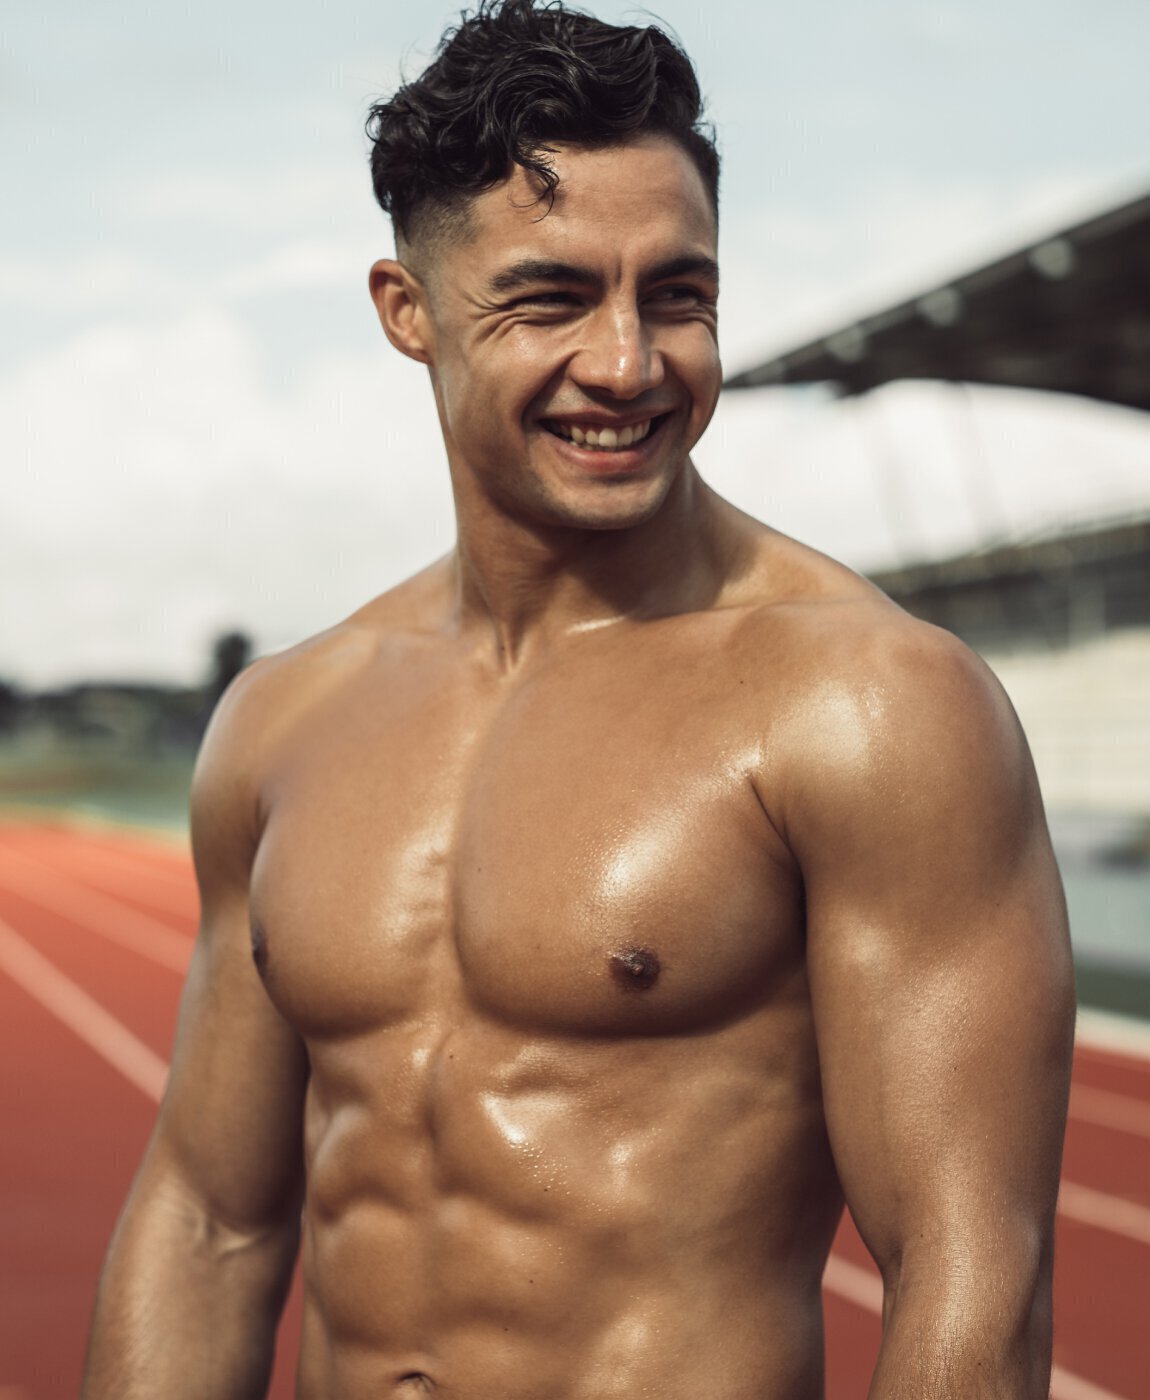 Muscular man on a running track